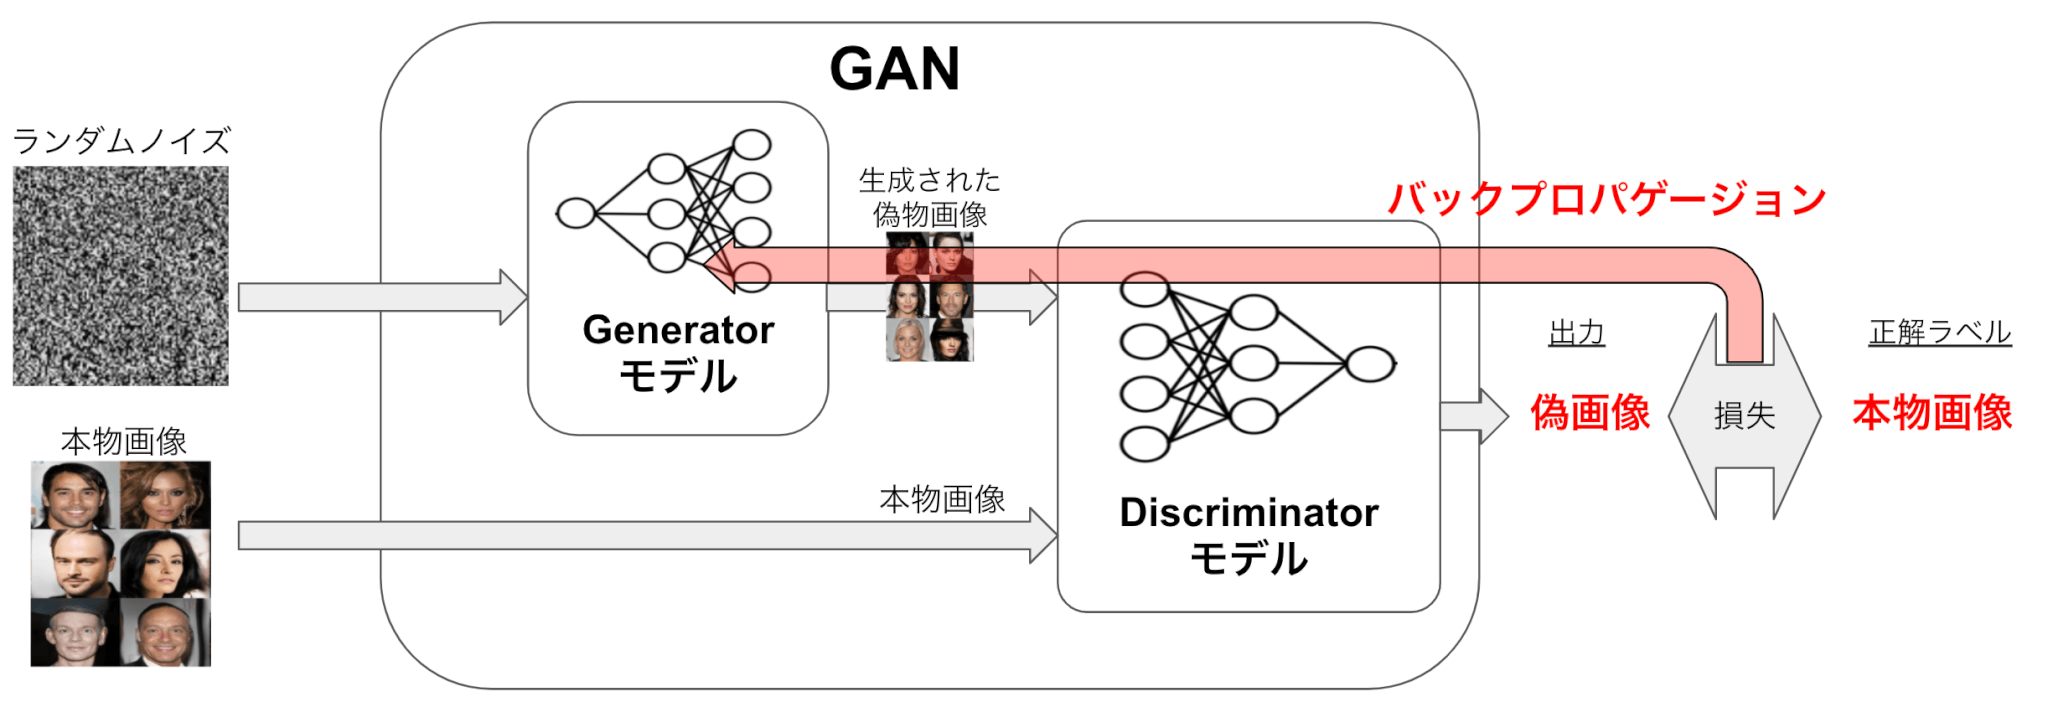 GANの学習の仕組み詳細　Gはノイズから画像を出力できるように、転置畳み込み層などを用いたニューラルネットワークを設定する。  Dは画像から本物/偽物のラベルを出力できるように、畳み込み層を用いたニューラルネットワークを設定する。（こちらは普通のCNNモデルと捉えても問題ない）  Dの出力と正解ラベル（偽画像か本物画像か）の損失を計算し、その損失をDとGにバックプロパゲーションを行うことによりGとDのネットワークの学習を行う